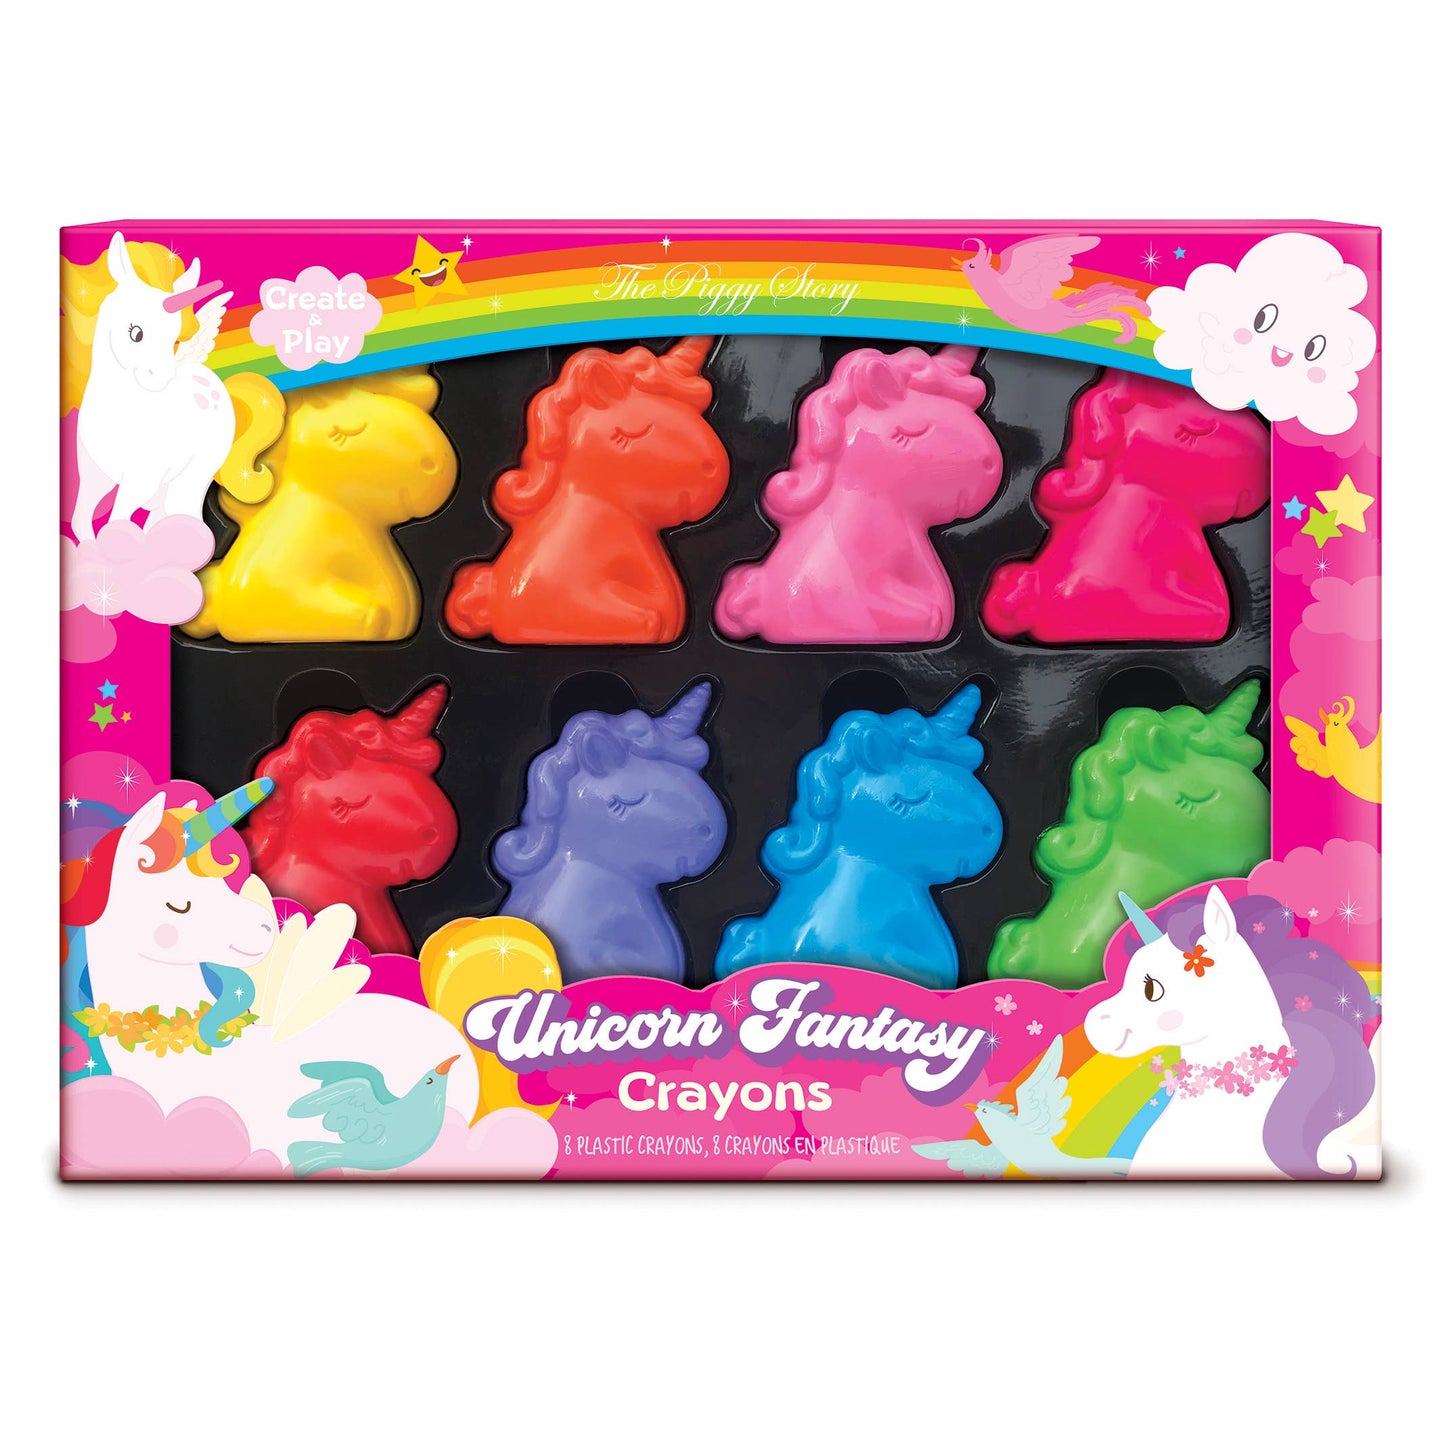 Unicorn Fantasy Crayons of Fun